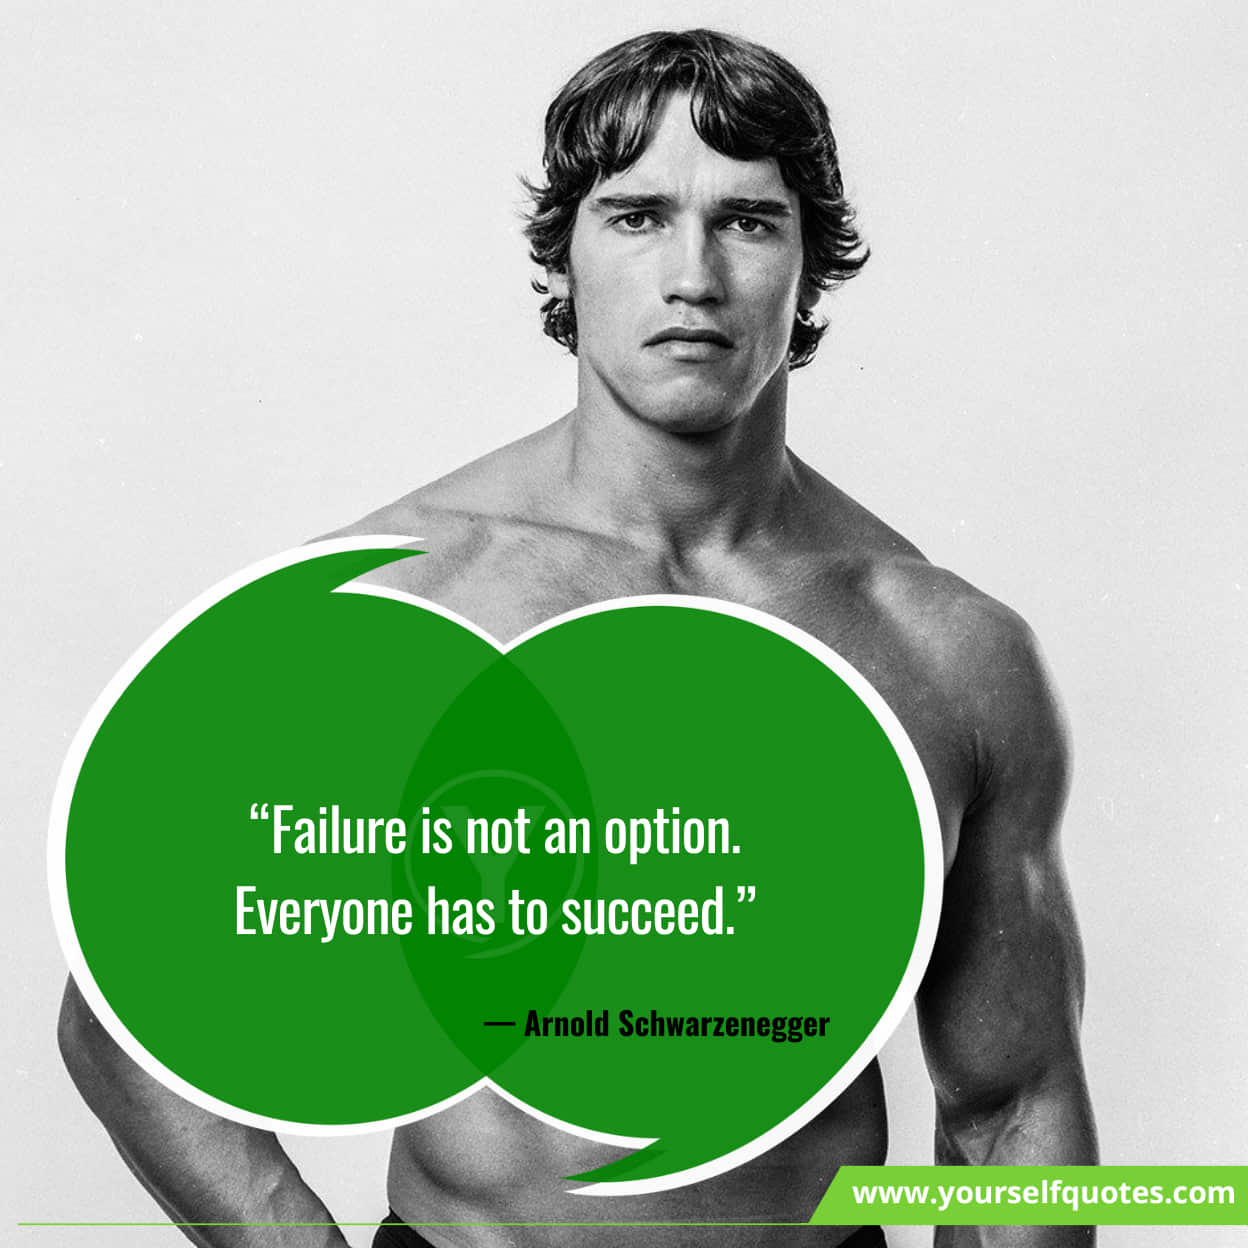 Arnold Schwarzenegger Quotes On Failure